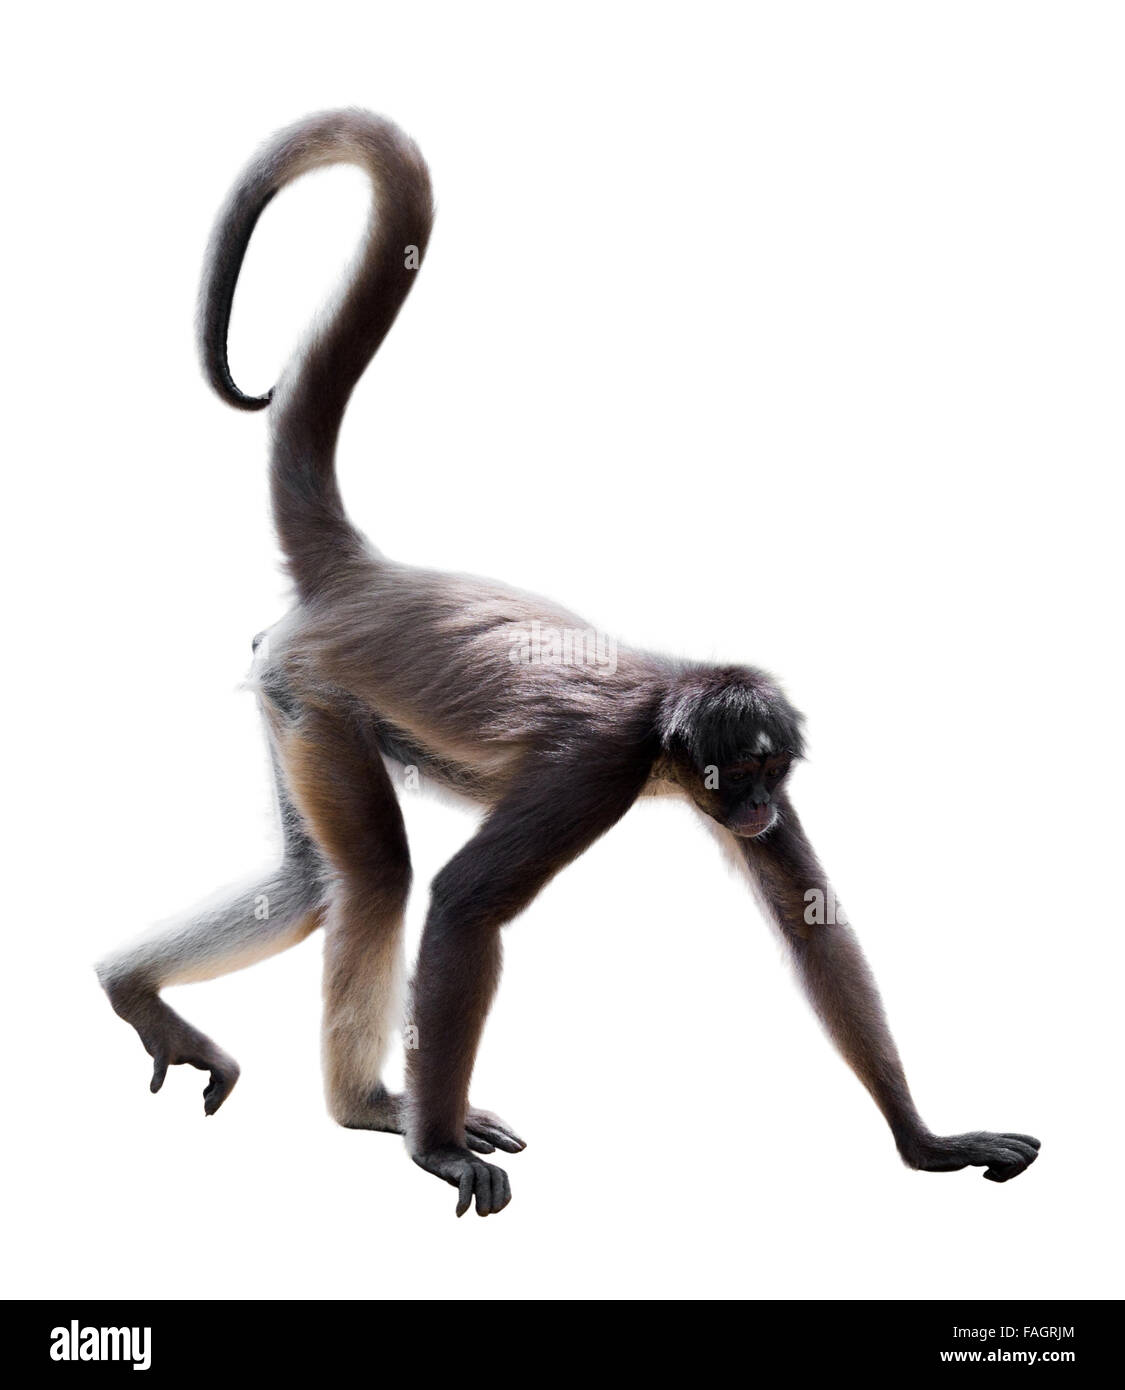 long-haired spider monkey (Ateles belzebuth). Isolated on white background Stock Photo